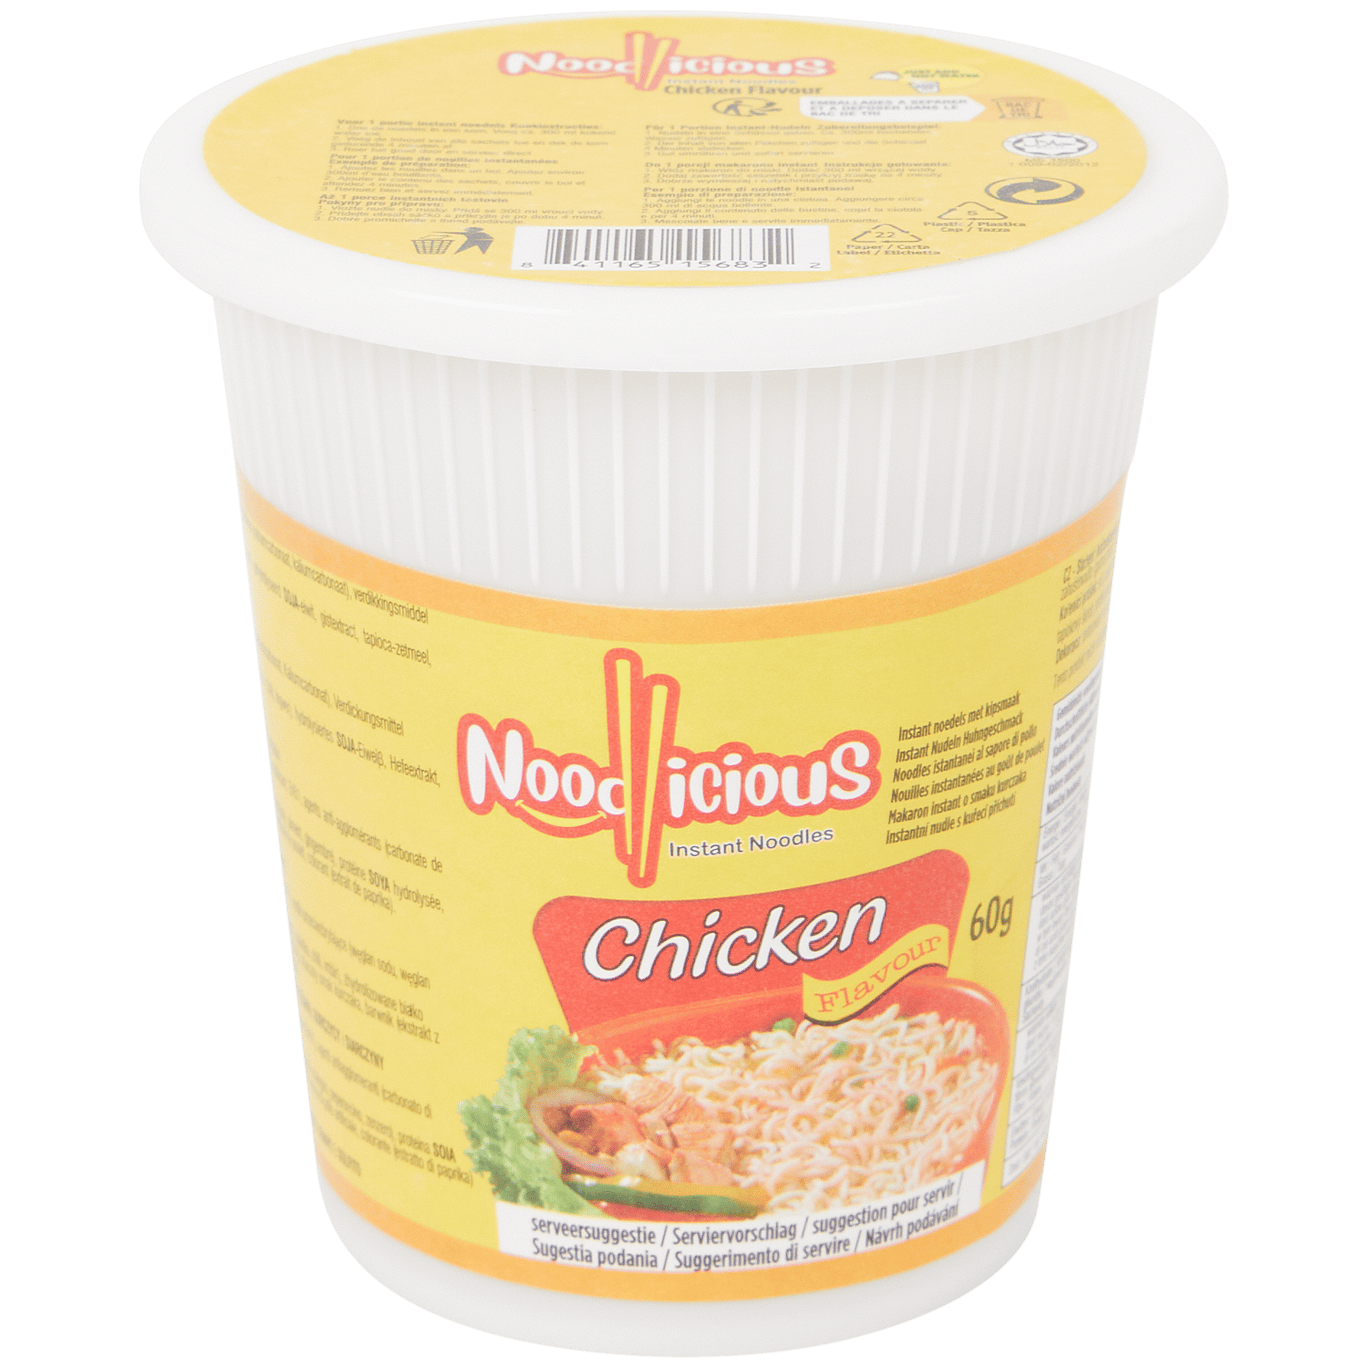 Noodles istantanei Noodlicious